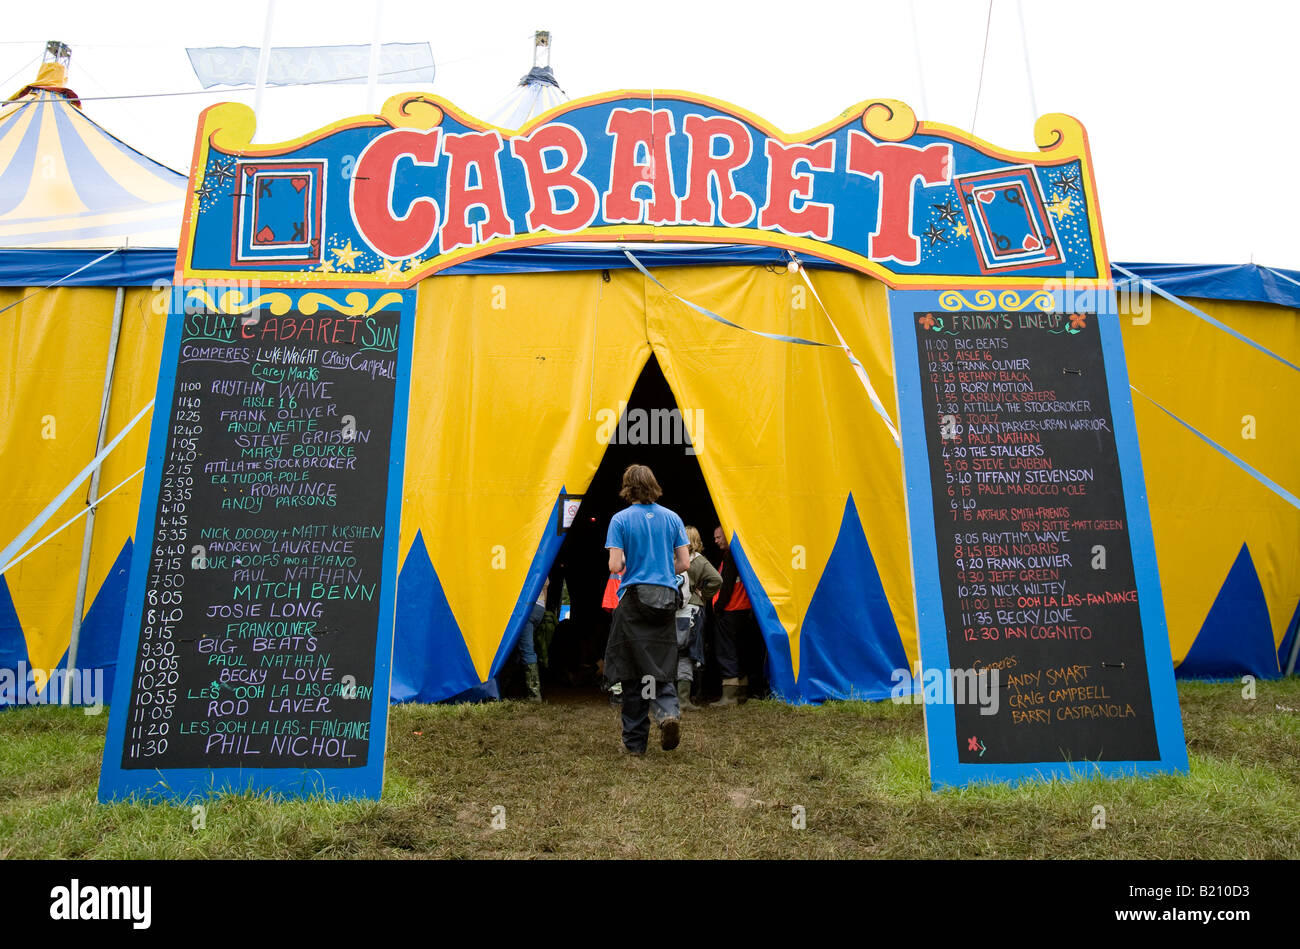 the-cabaret-tent-glastonbury-festival-pi